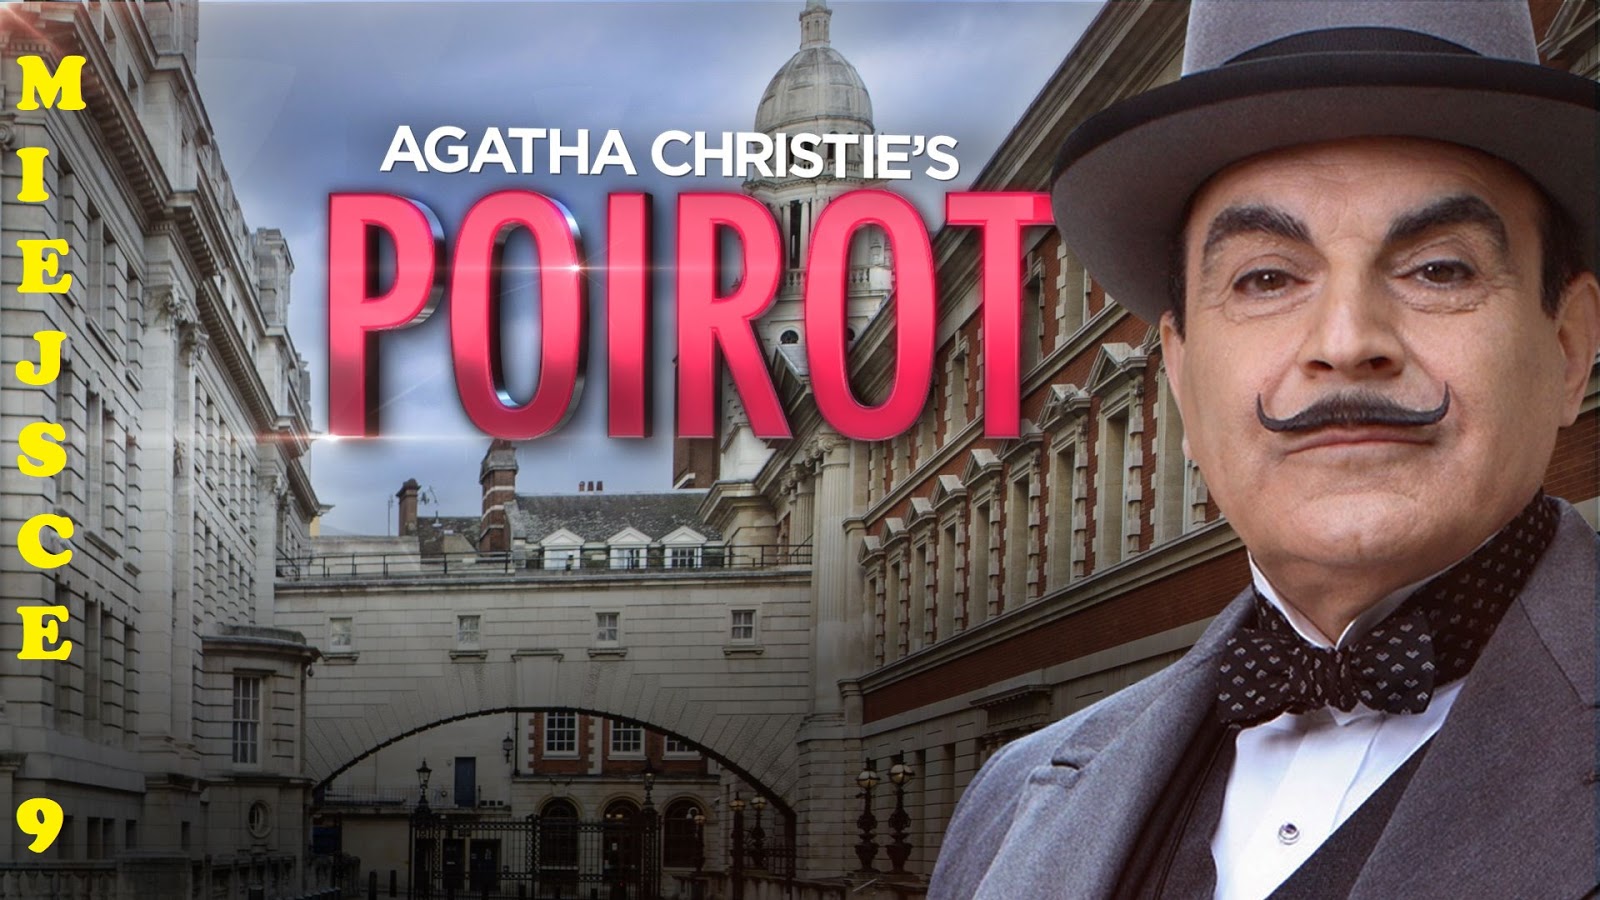 Poirot - seriale top 10